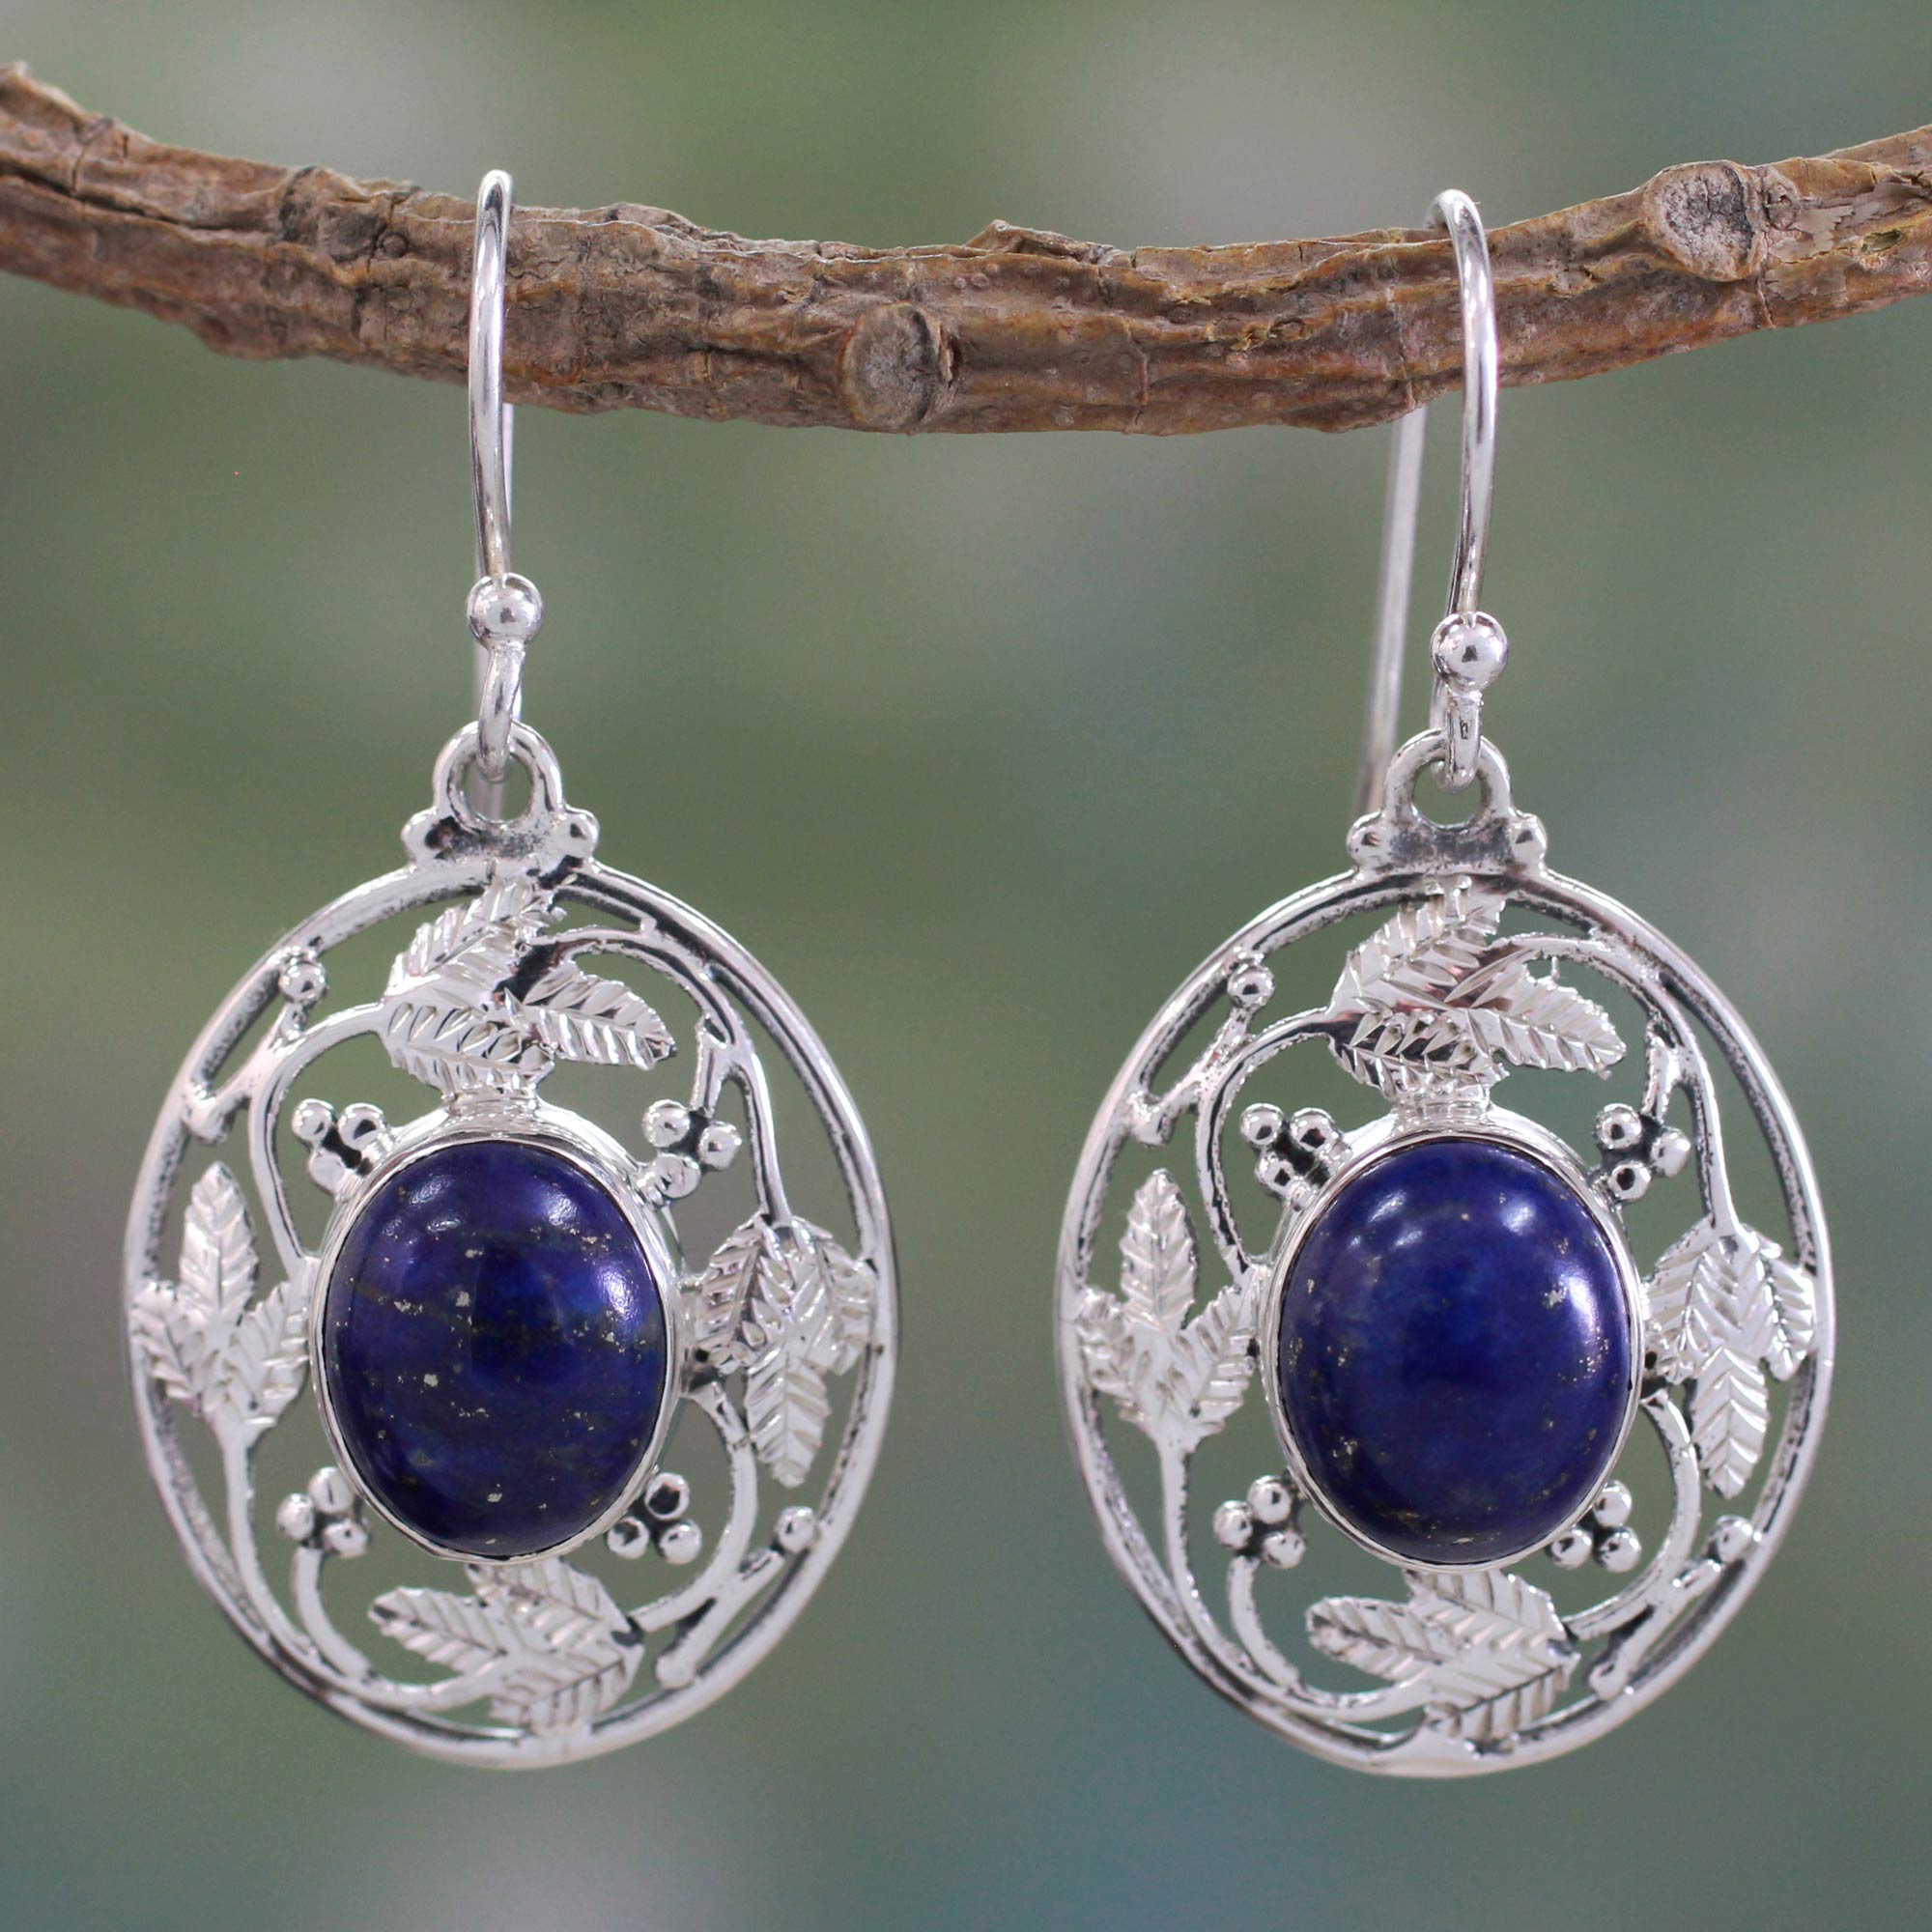 Fair Trade Lapis Lazuli sterling silver Handcrafted Earrings, 'Ocean Avatar'